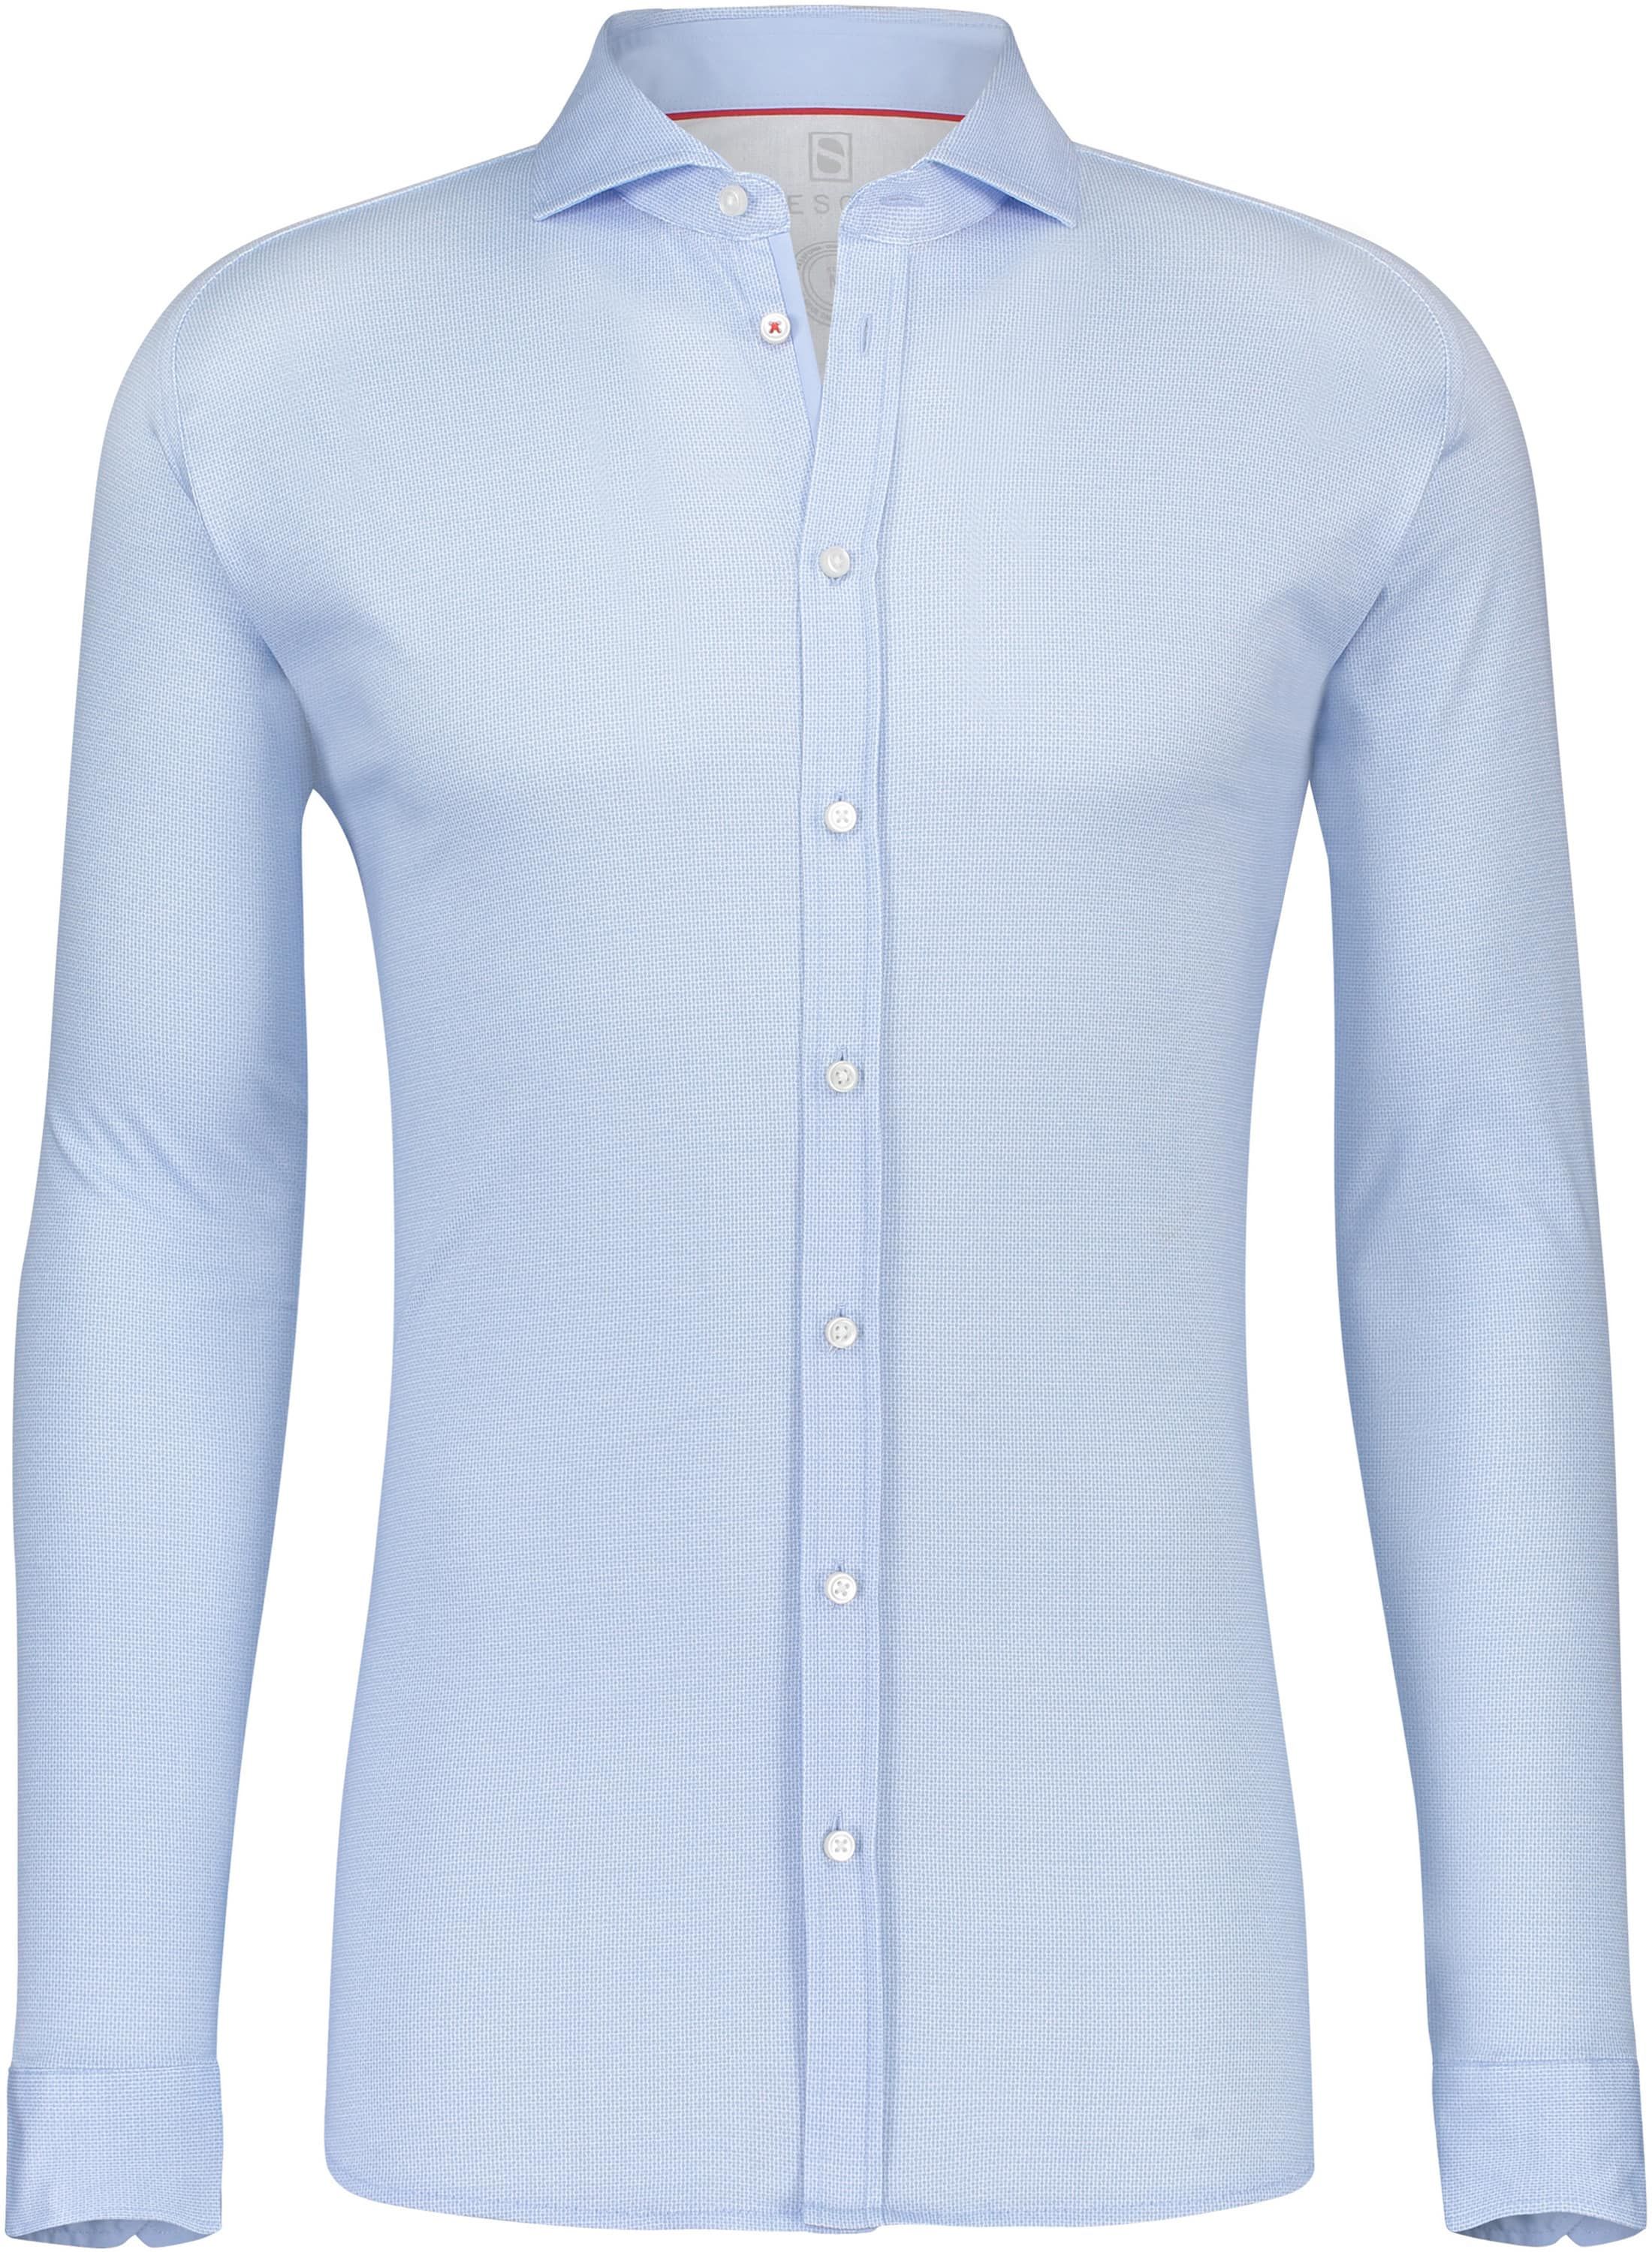 Desoto Shirt Non Iron 051 Light Blue size 3XL